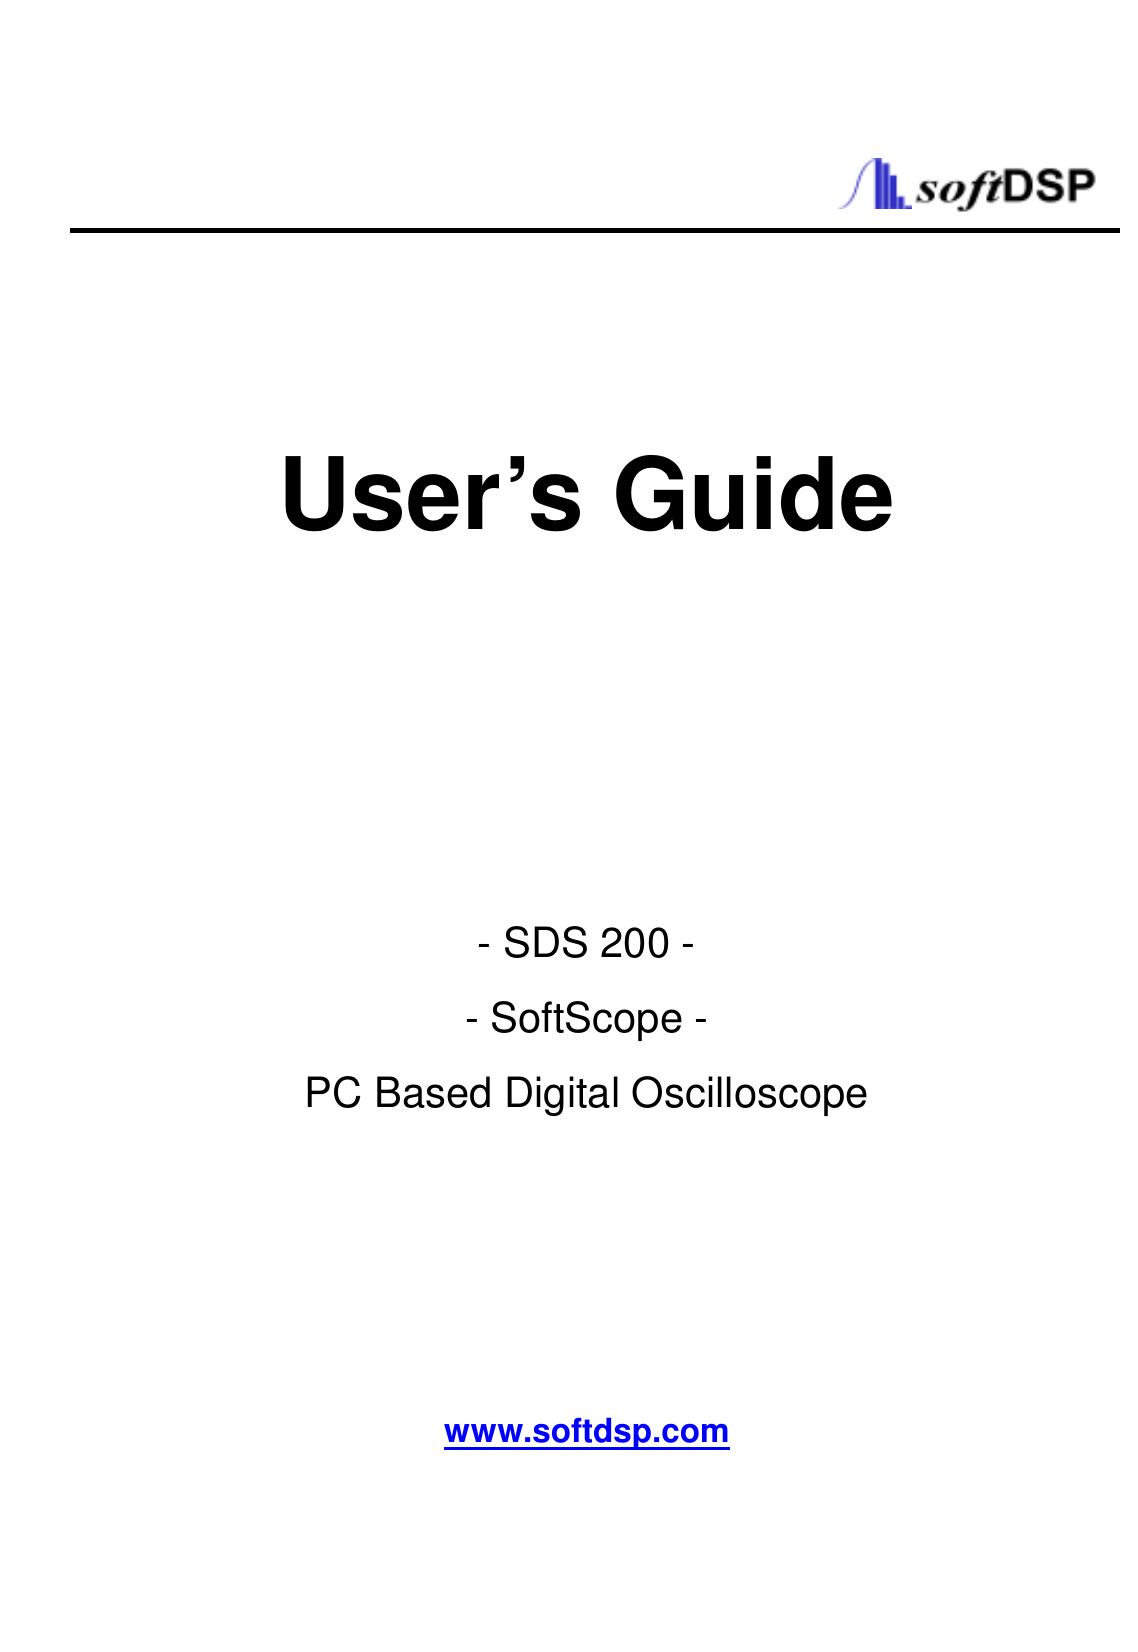       User’s Guide        - SDS 200 - - SoftScope - PC Based Digital Oscilloscope        www.softdsp.com  